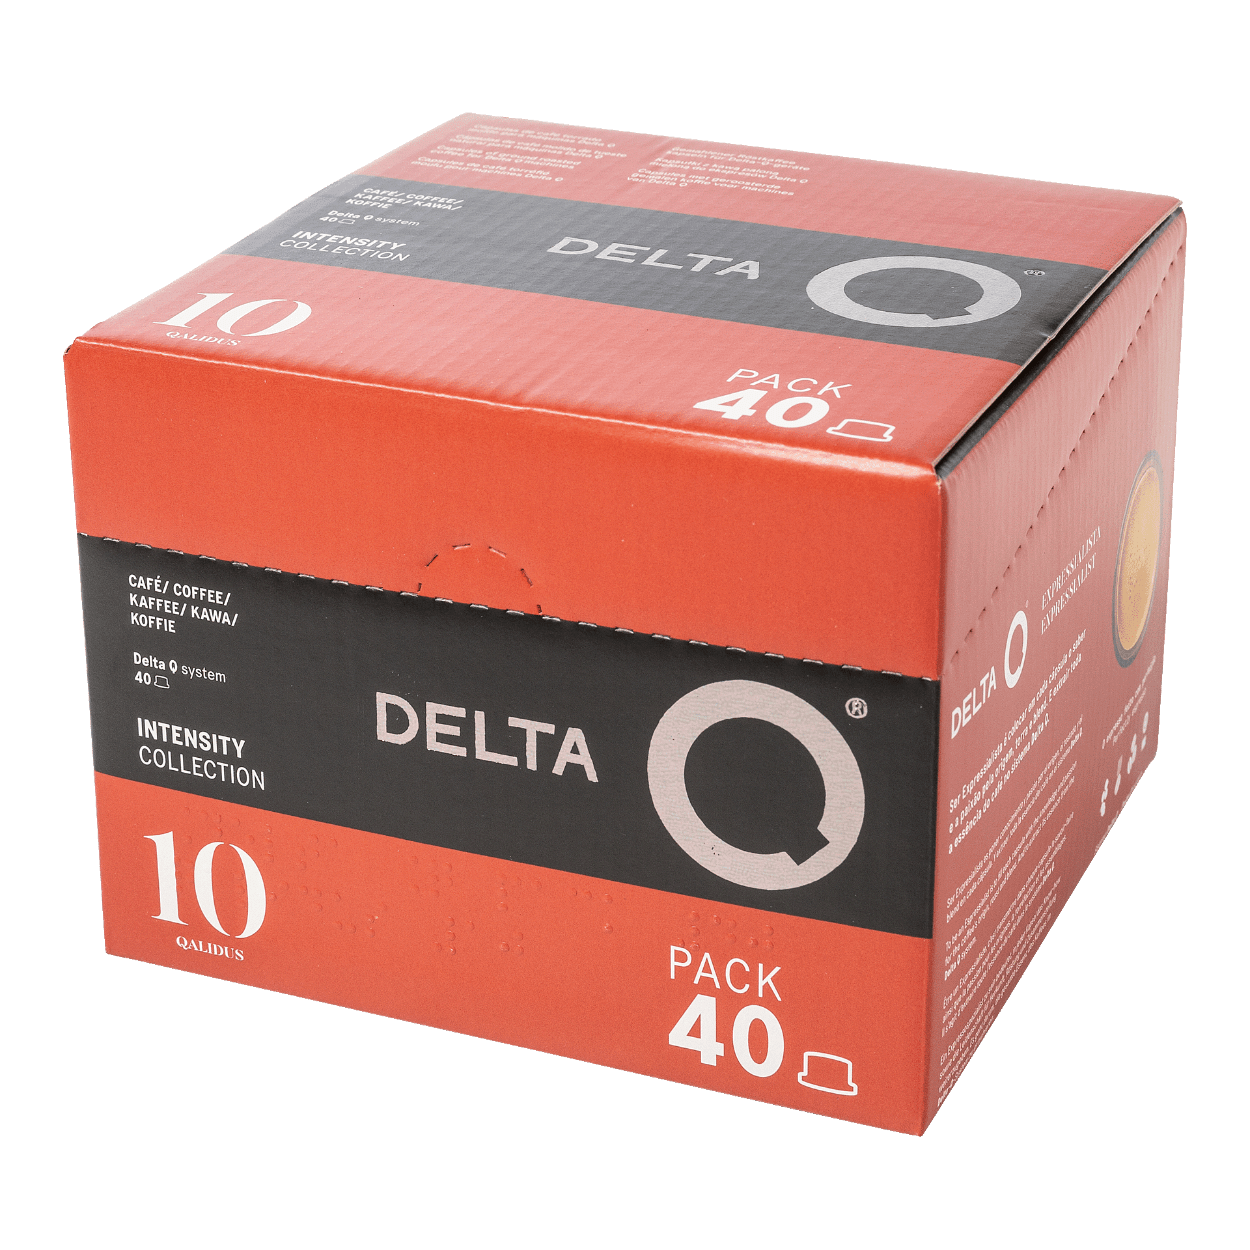 DELTA Q® Qalidus pack XL bon marché chez ALDI